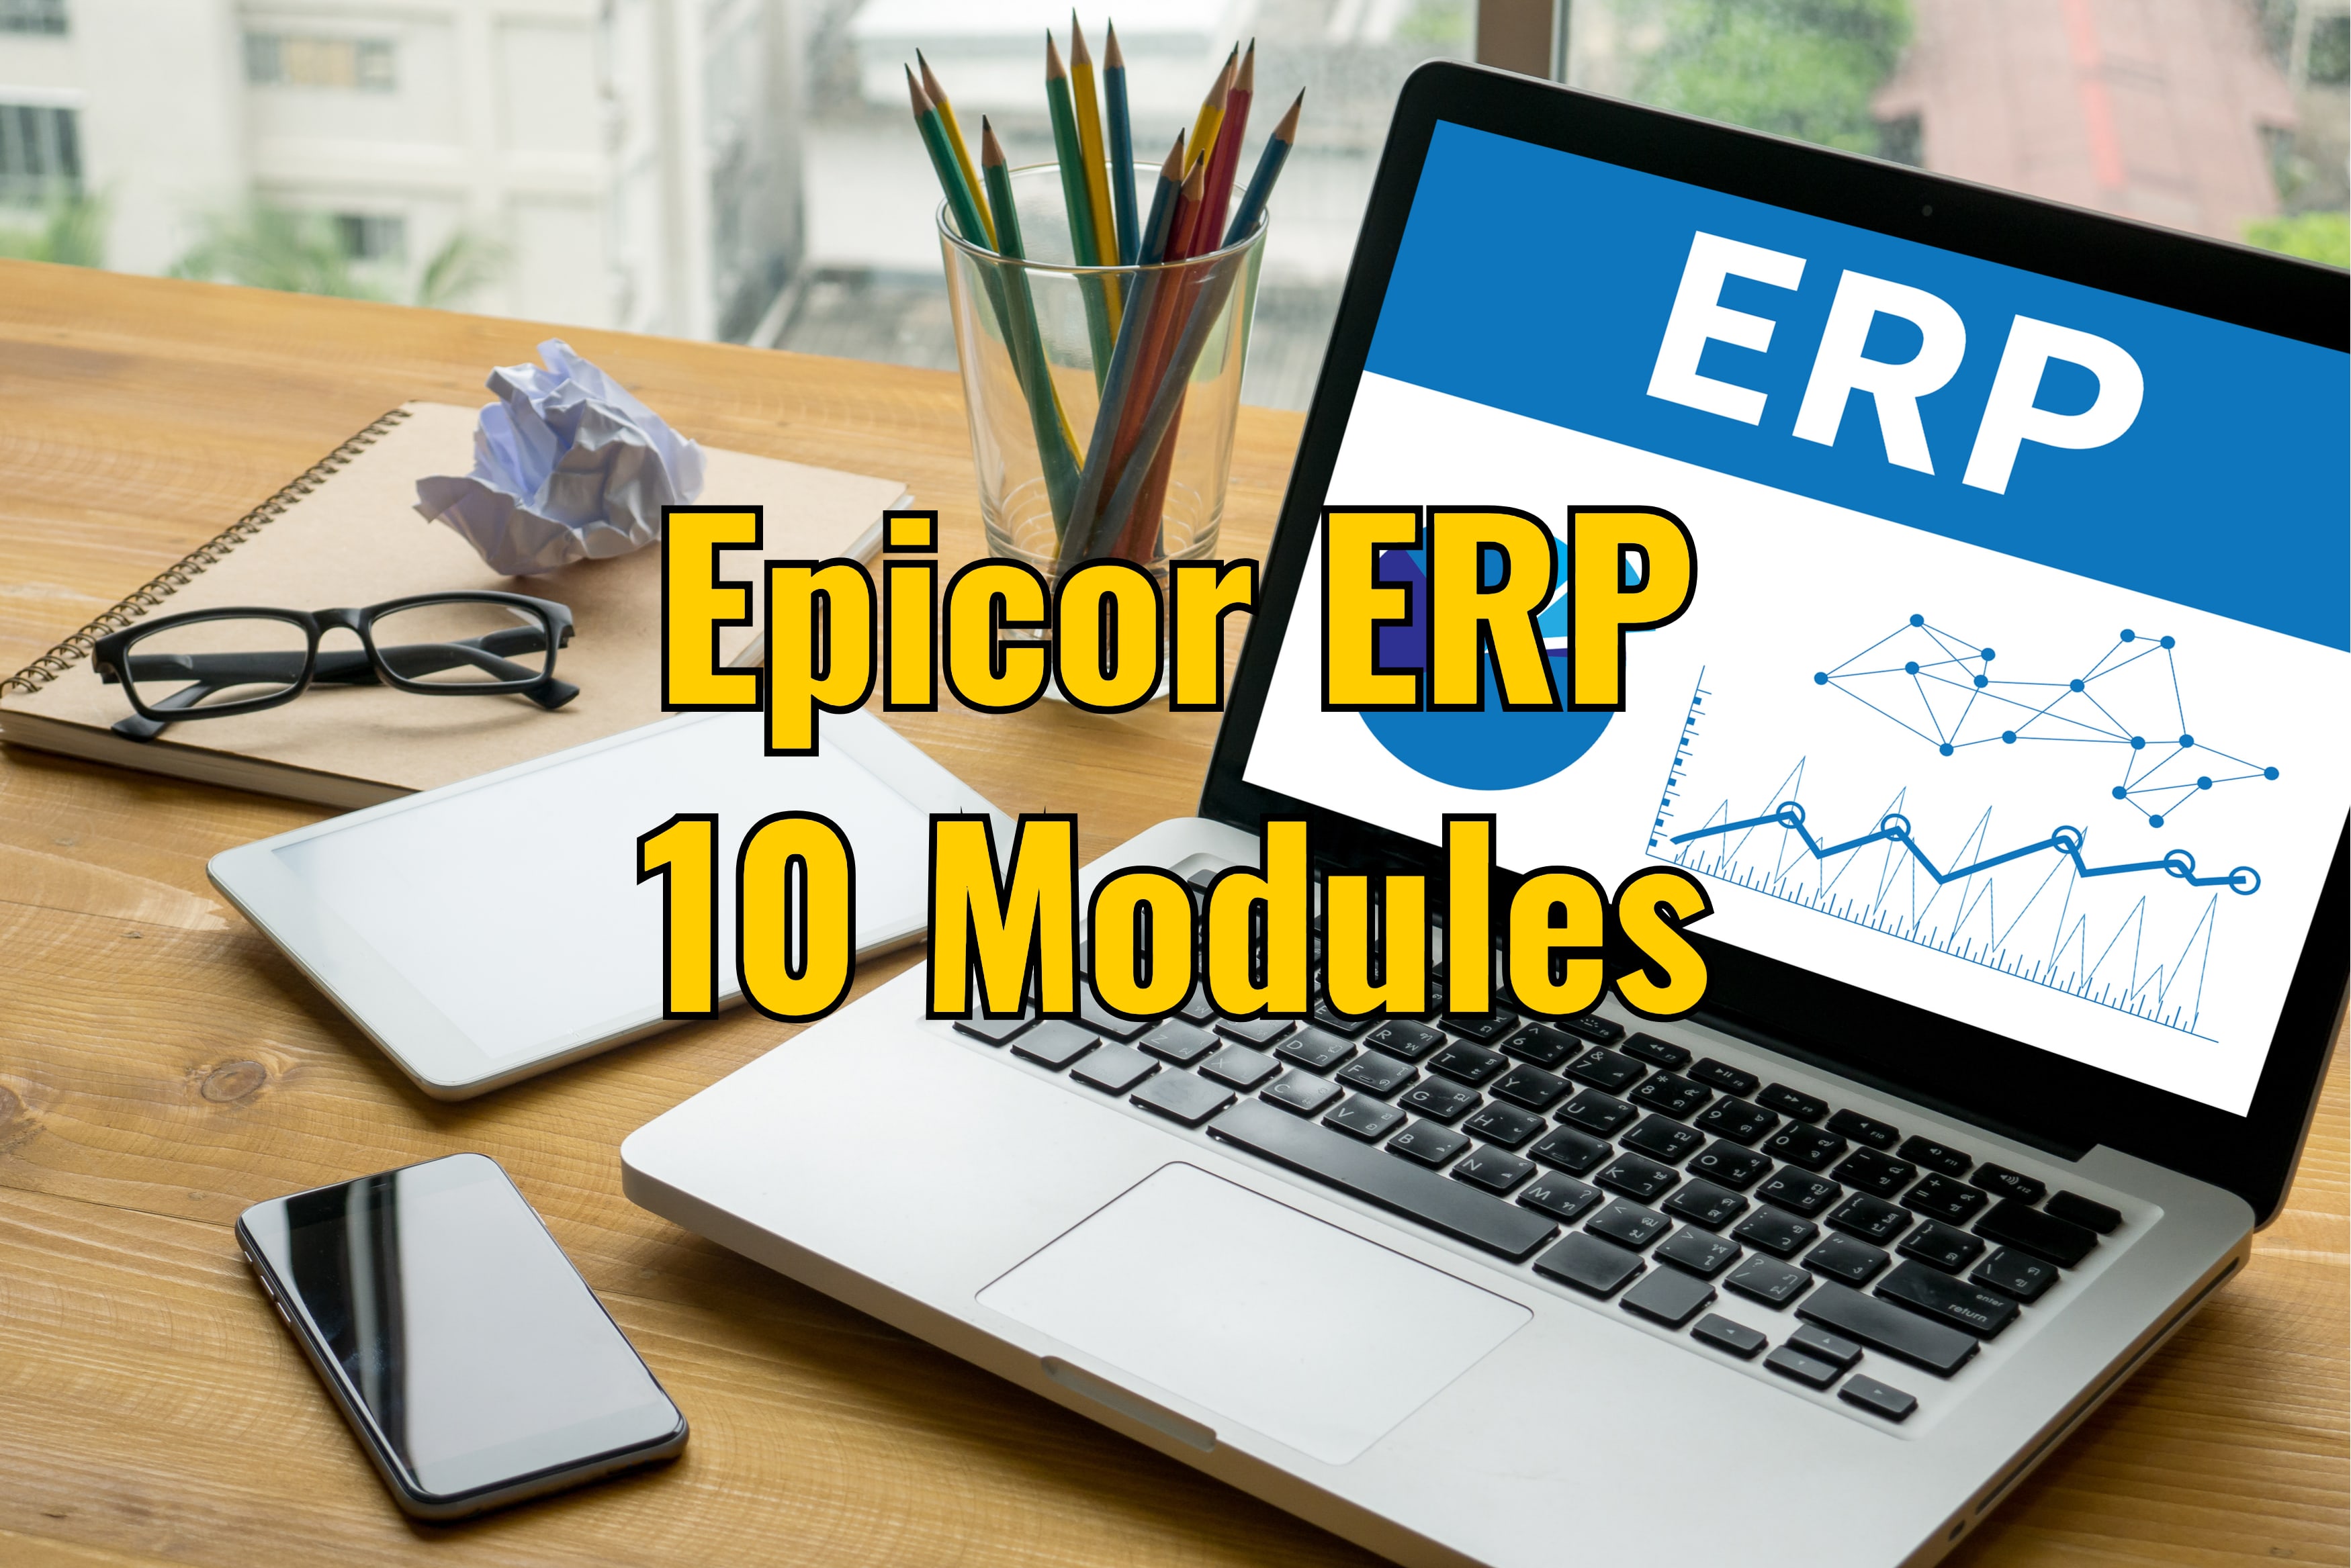 Epicor ERP 10’s Superior Modules, Part 2